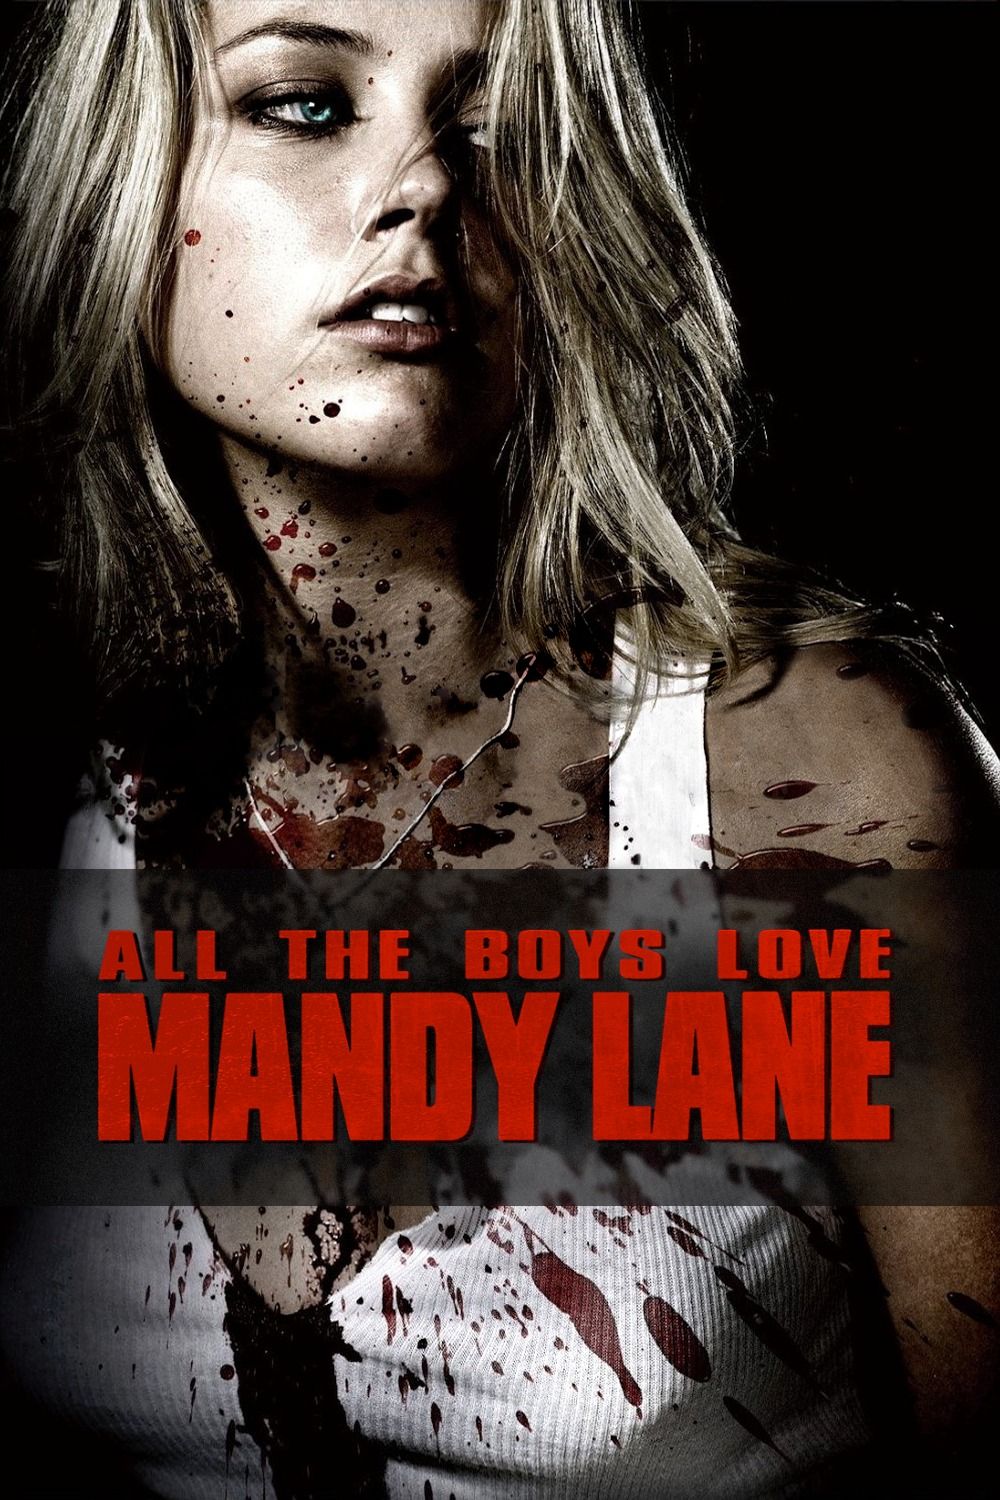 All the Boys Love Mandy Lane [Sub-ITA] [HD] (2006)